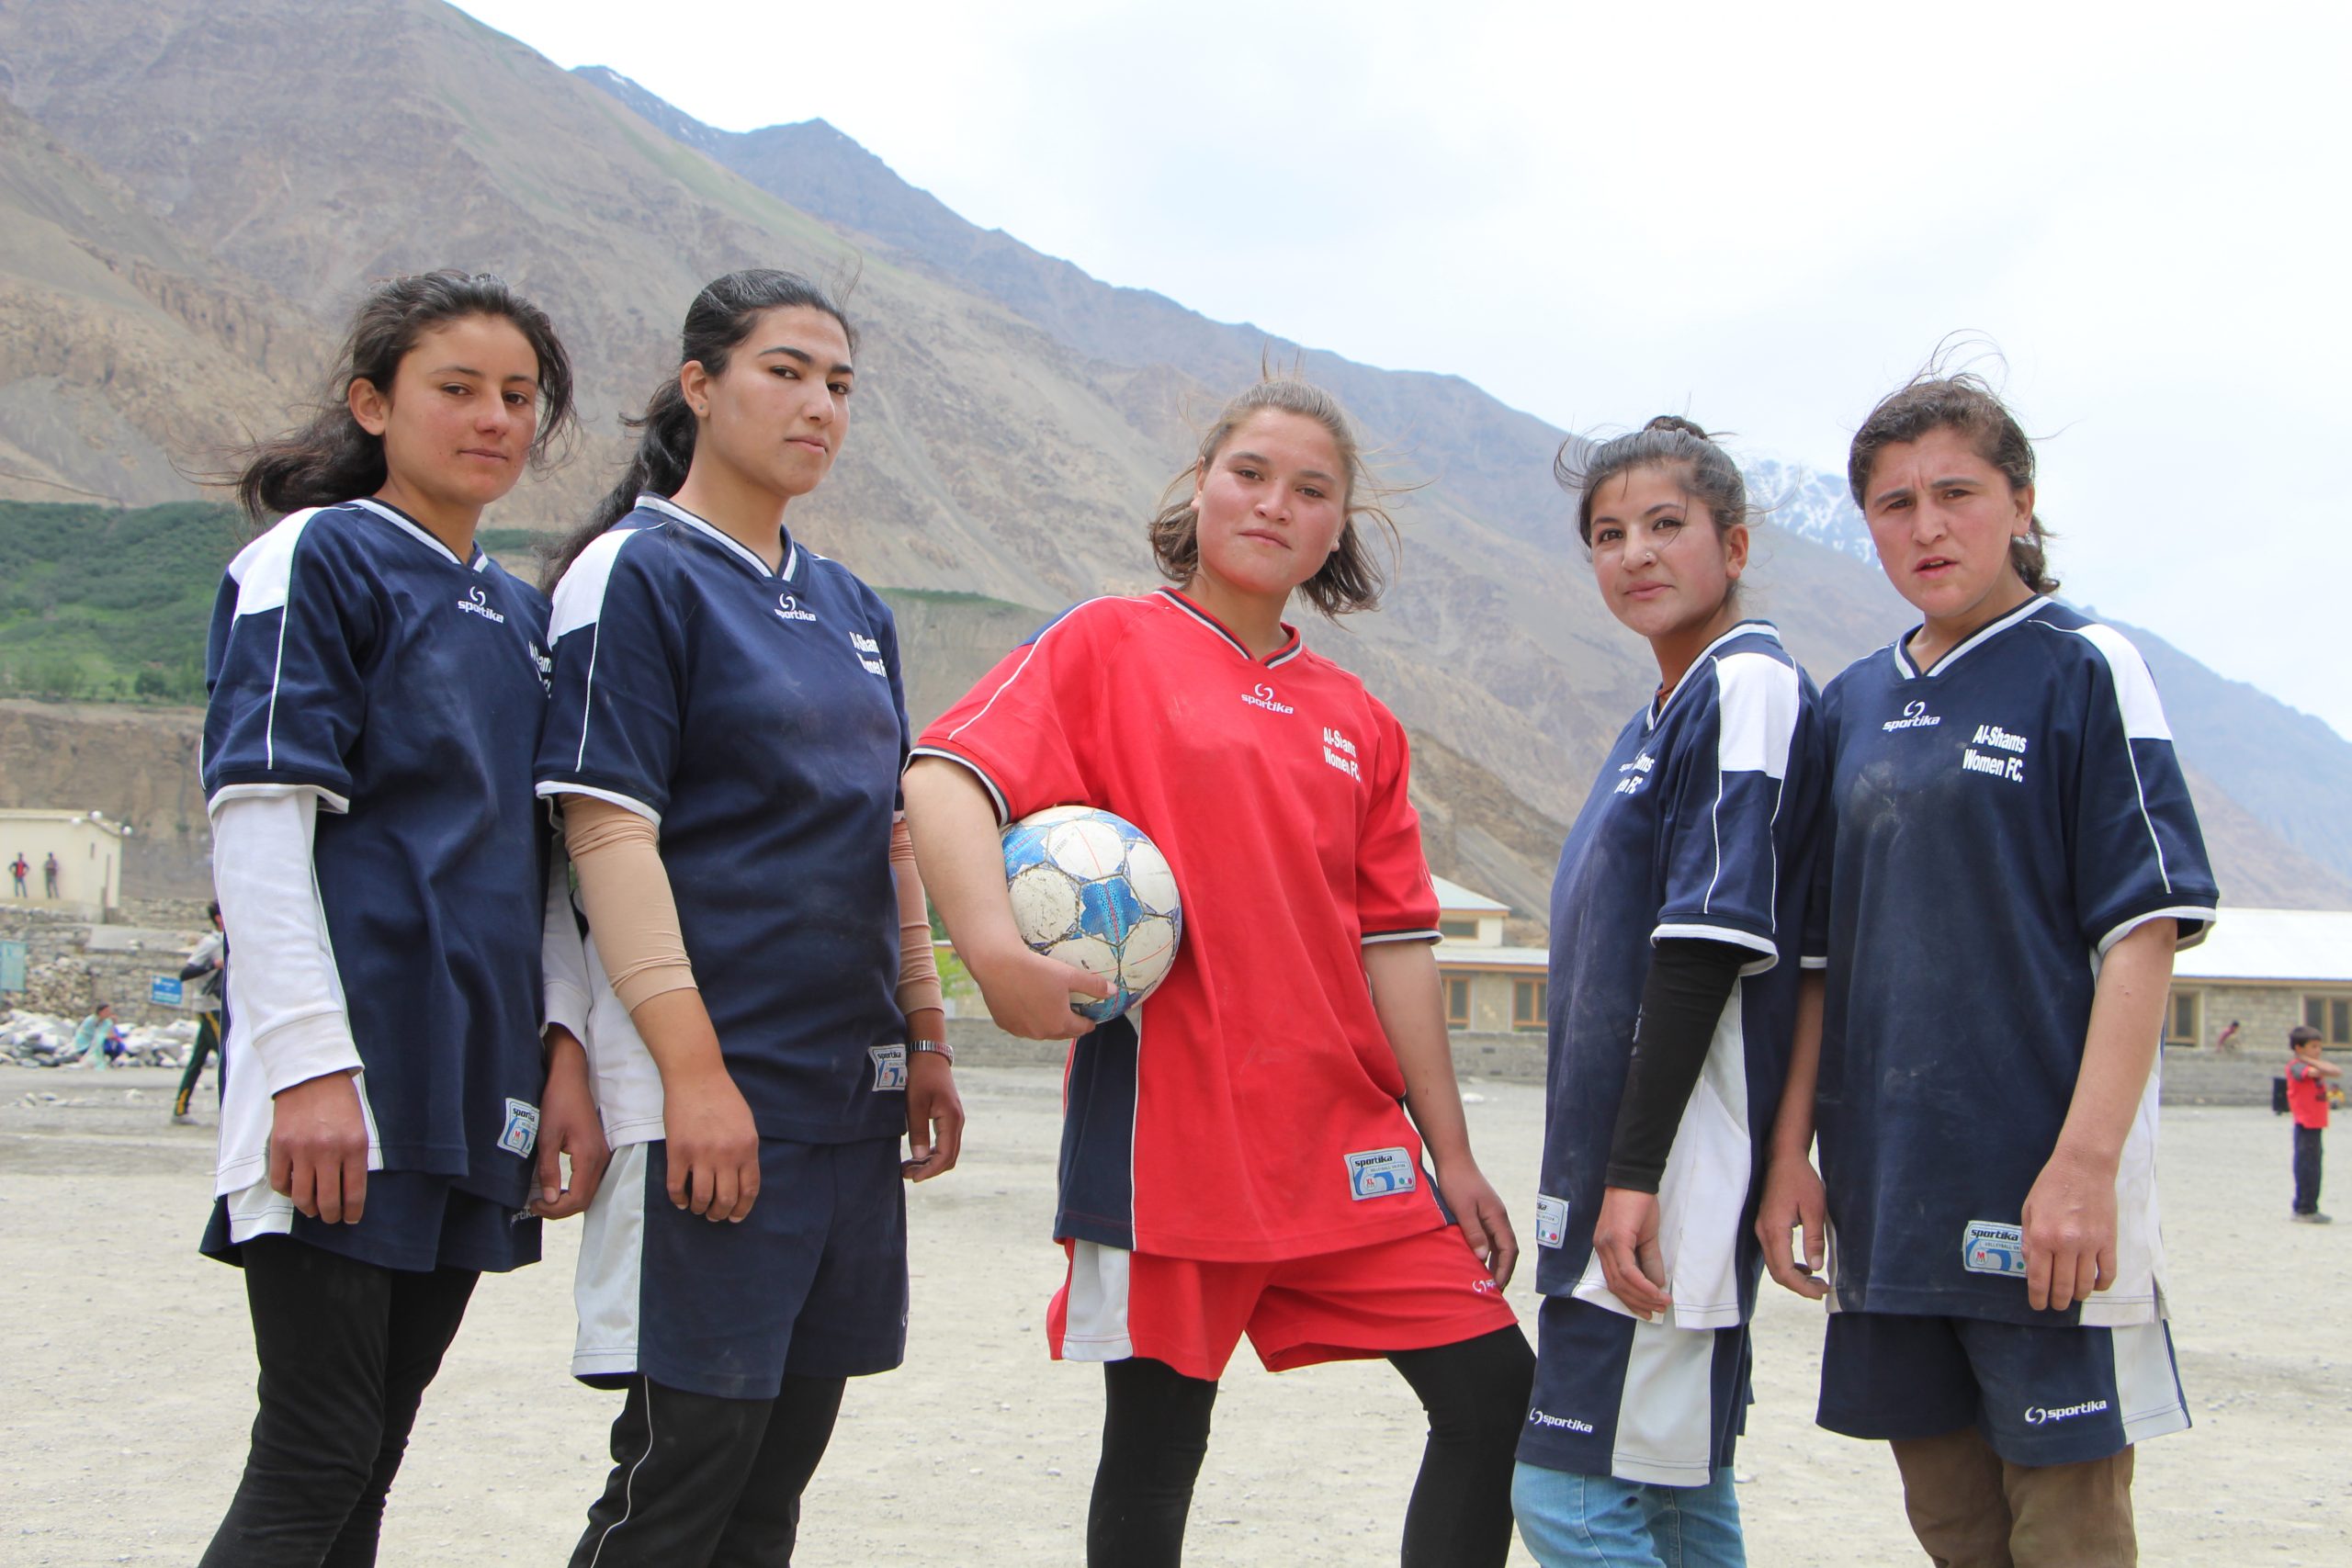 5 of the Al-Shams Women's FC team